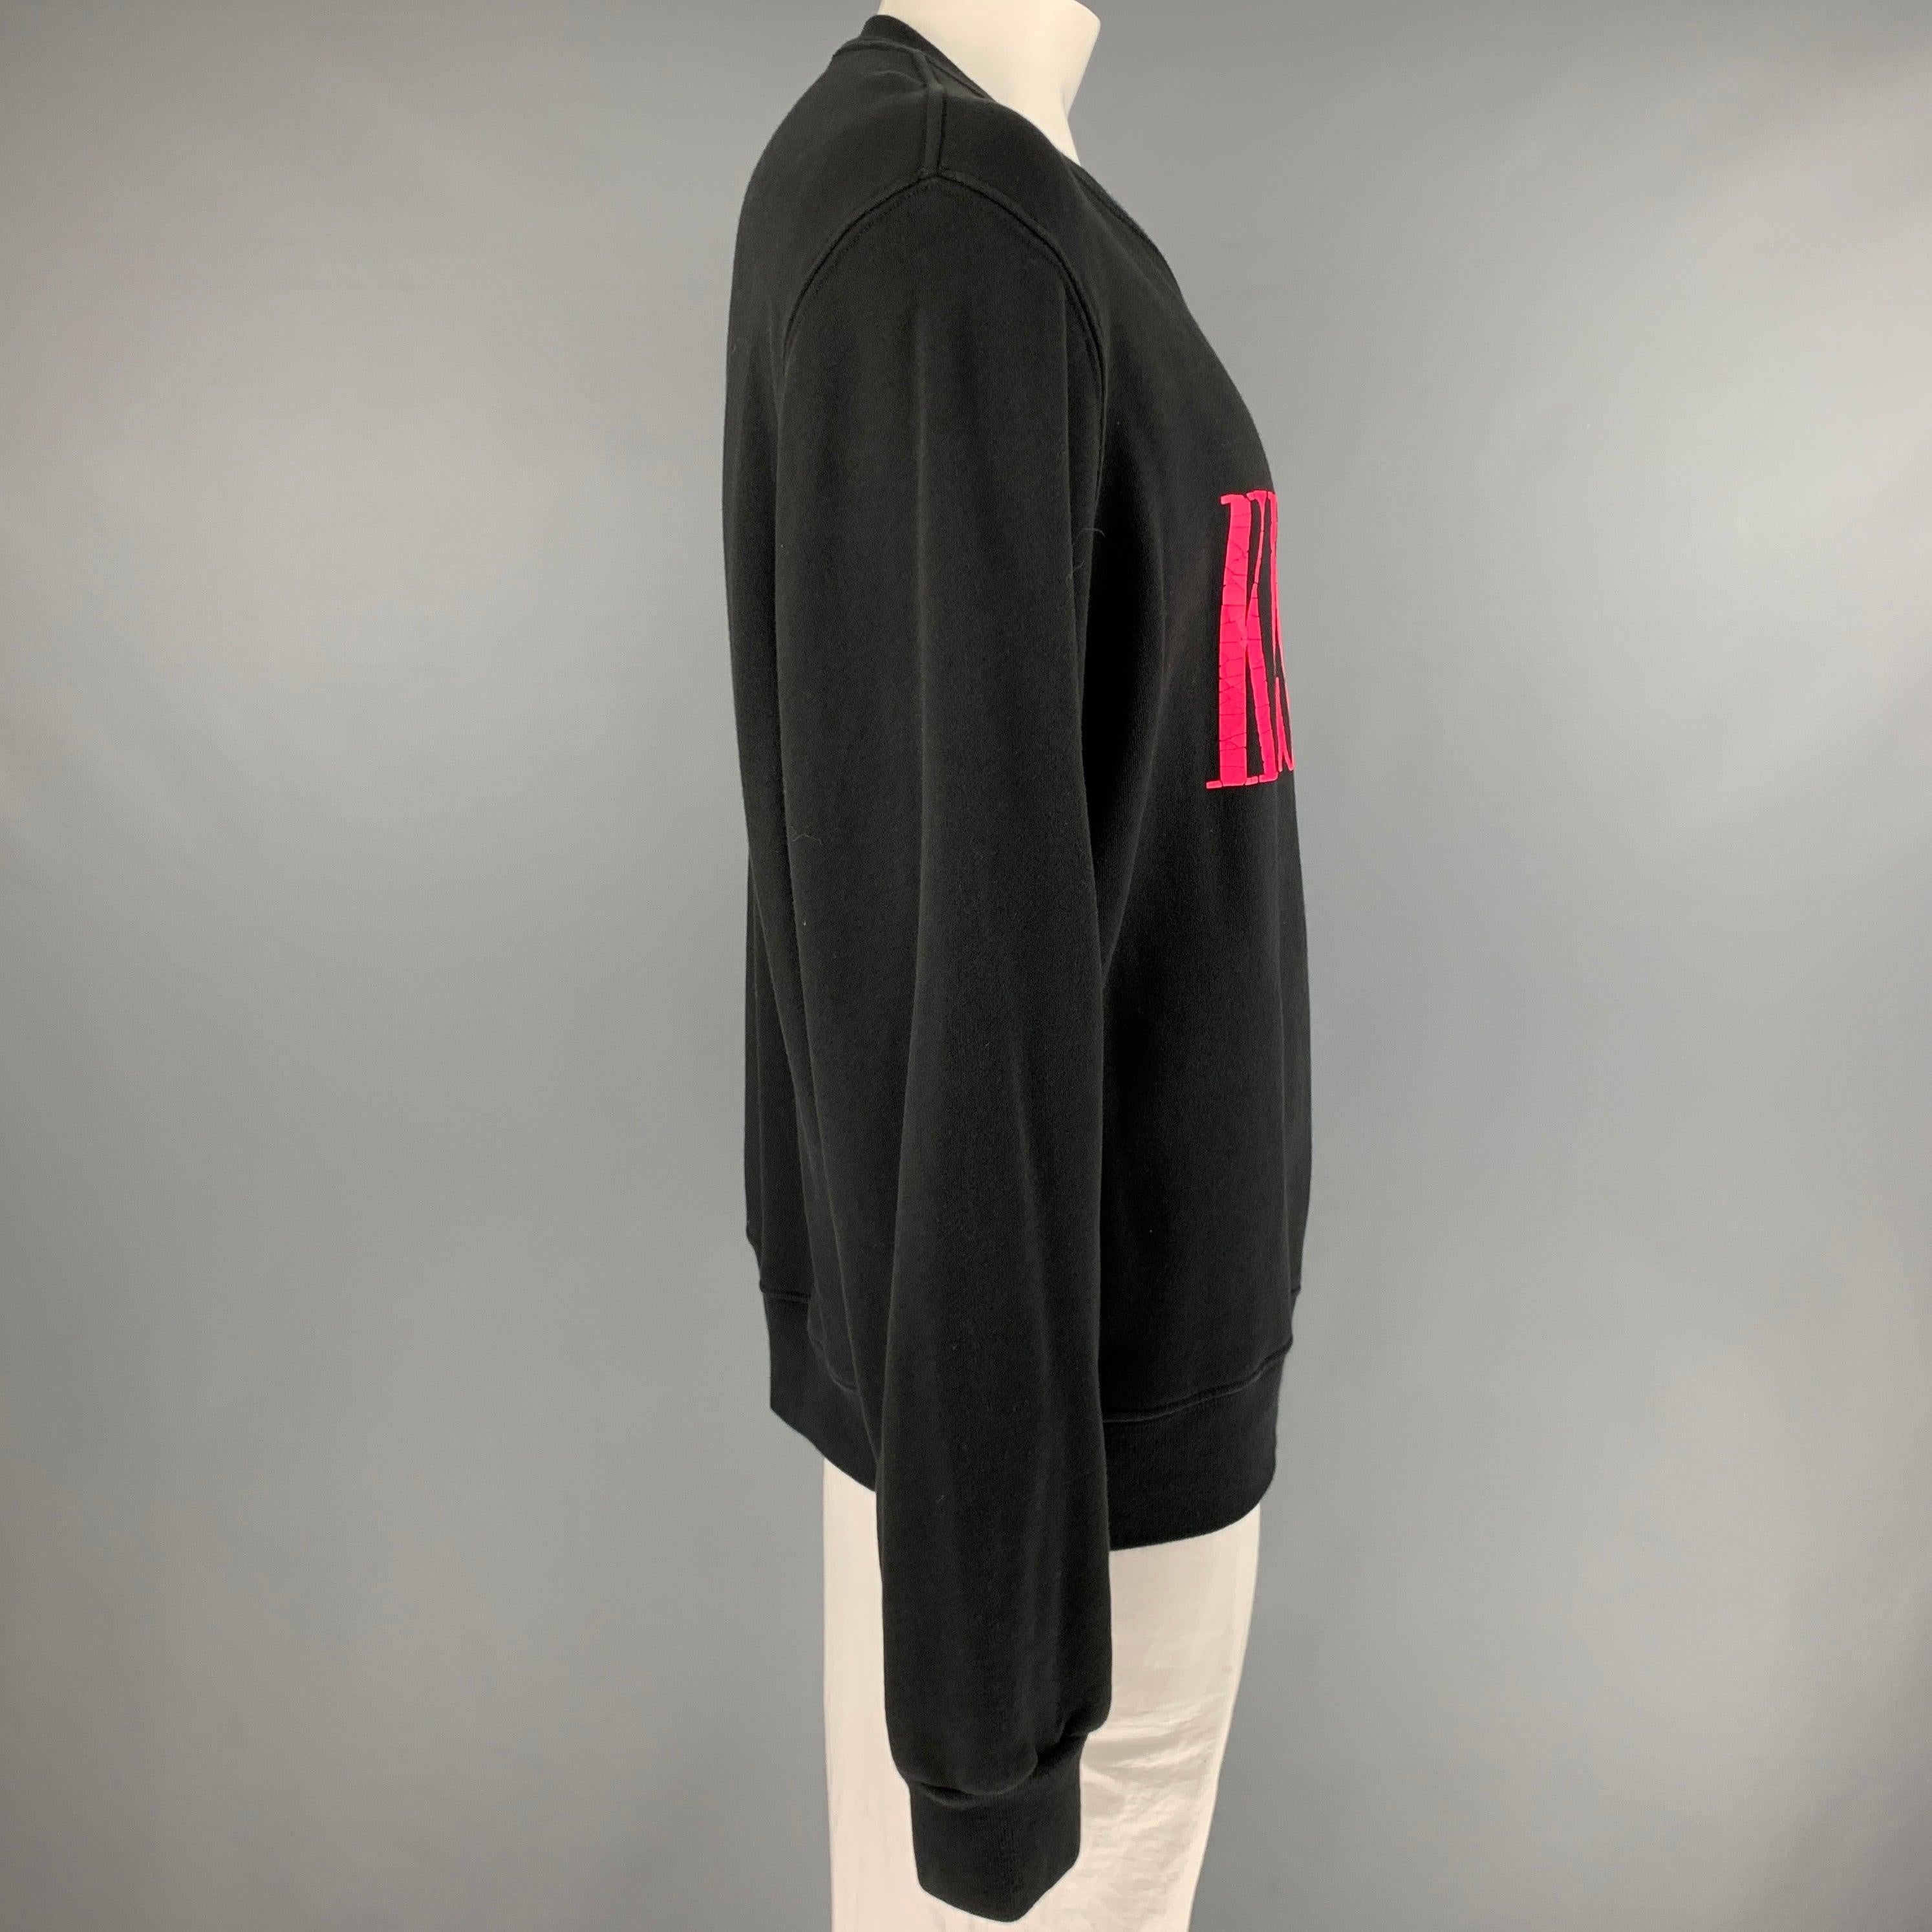 AMIRI sweatshirt
in a black cotton fabric featuring 